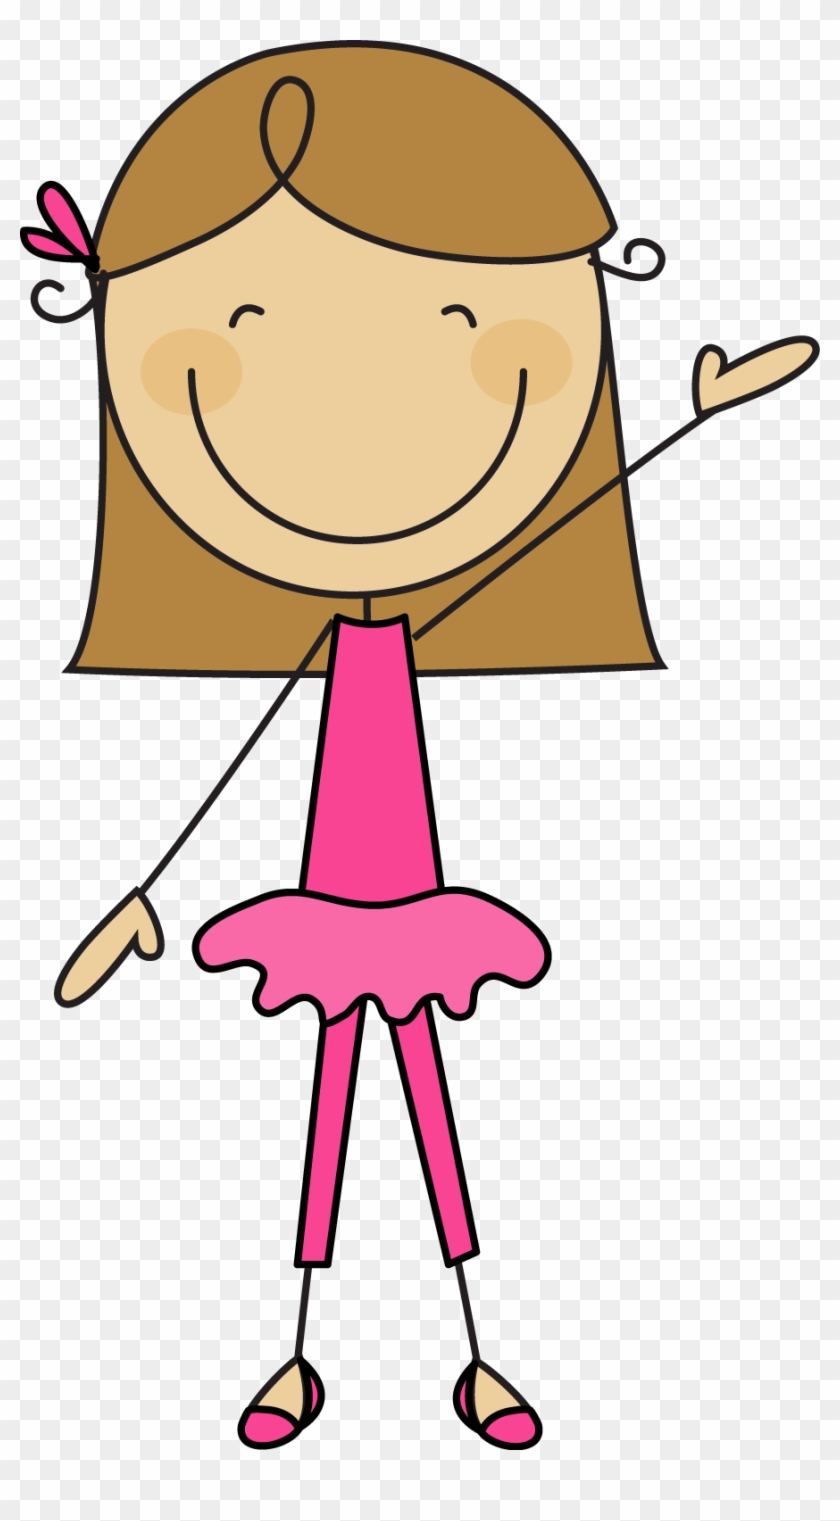 Stick Figure Of A Girl - Girl Stick Figure Cartoon #5628